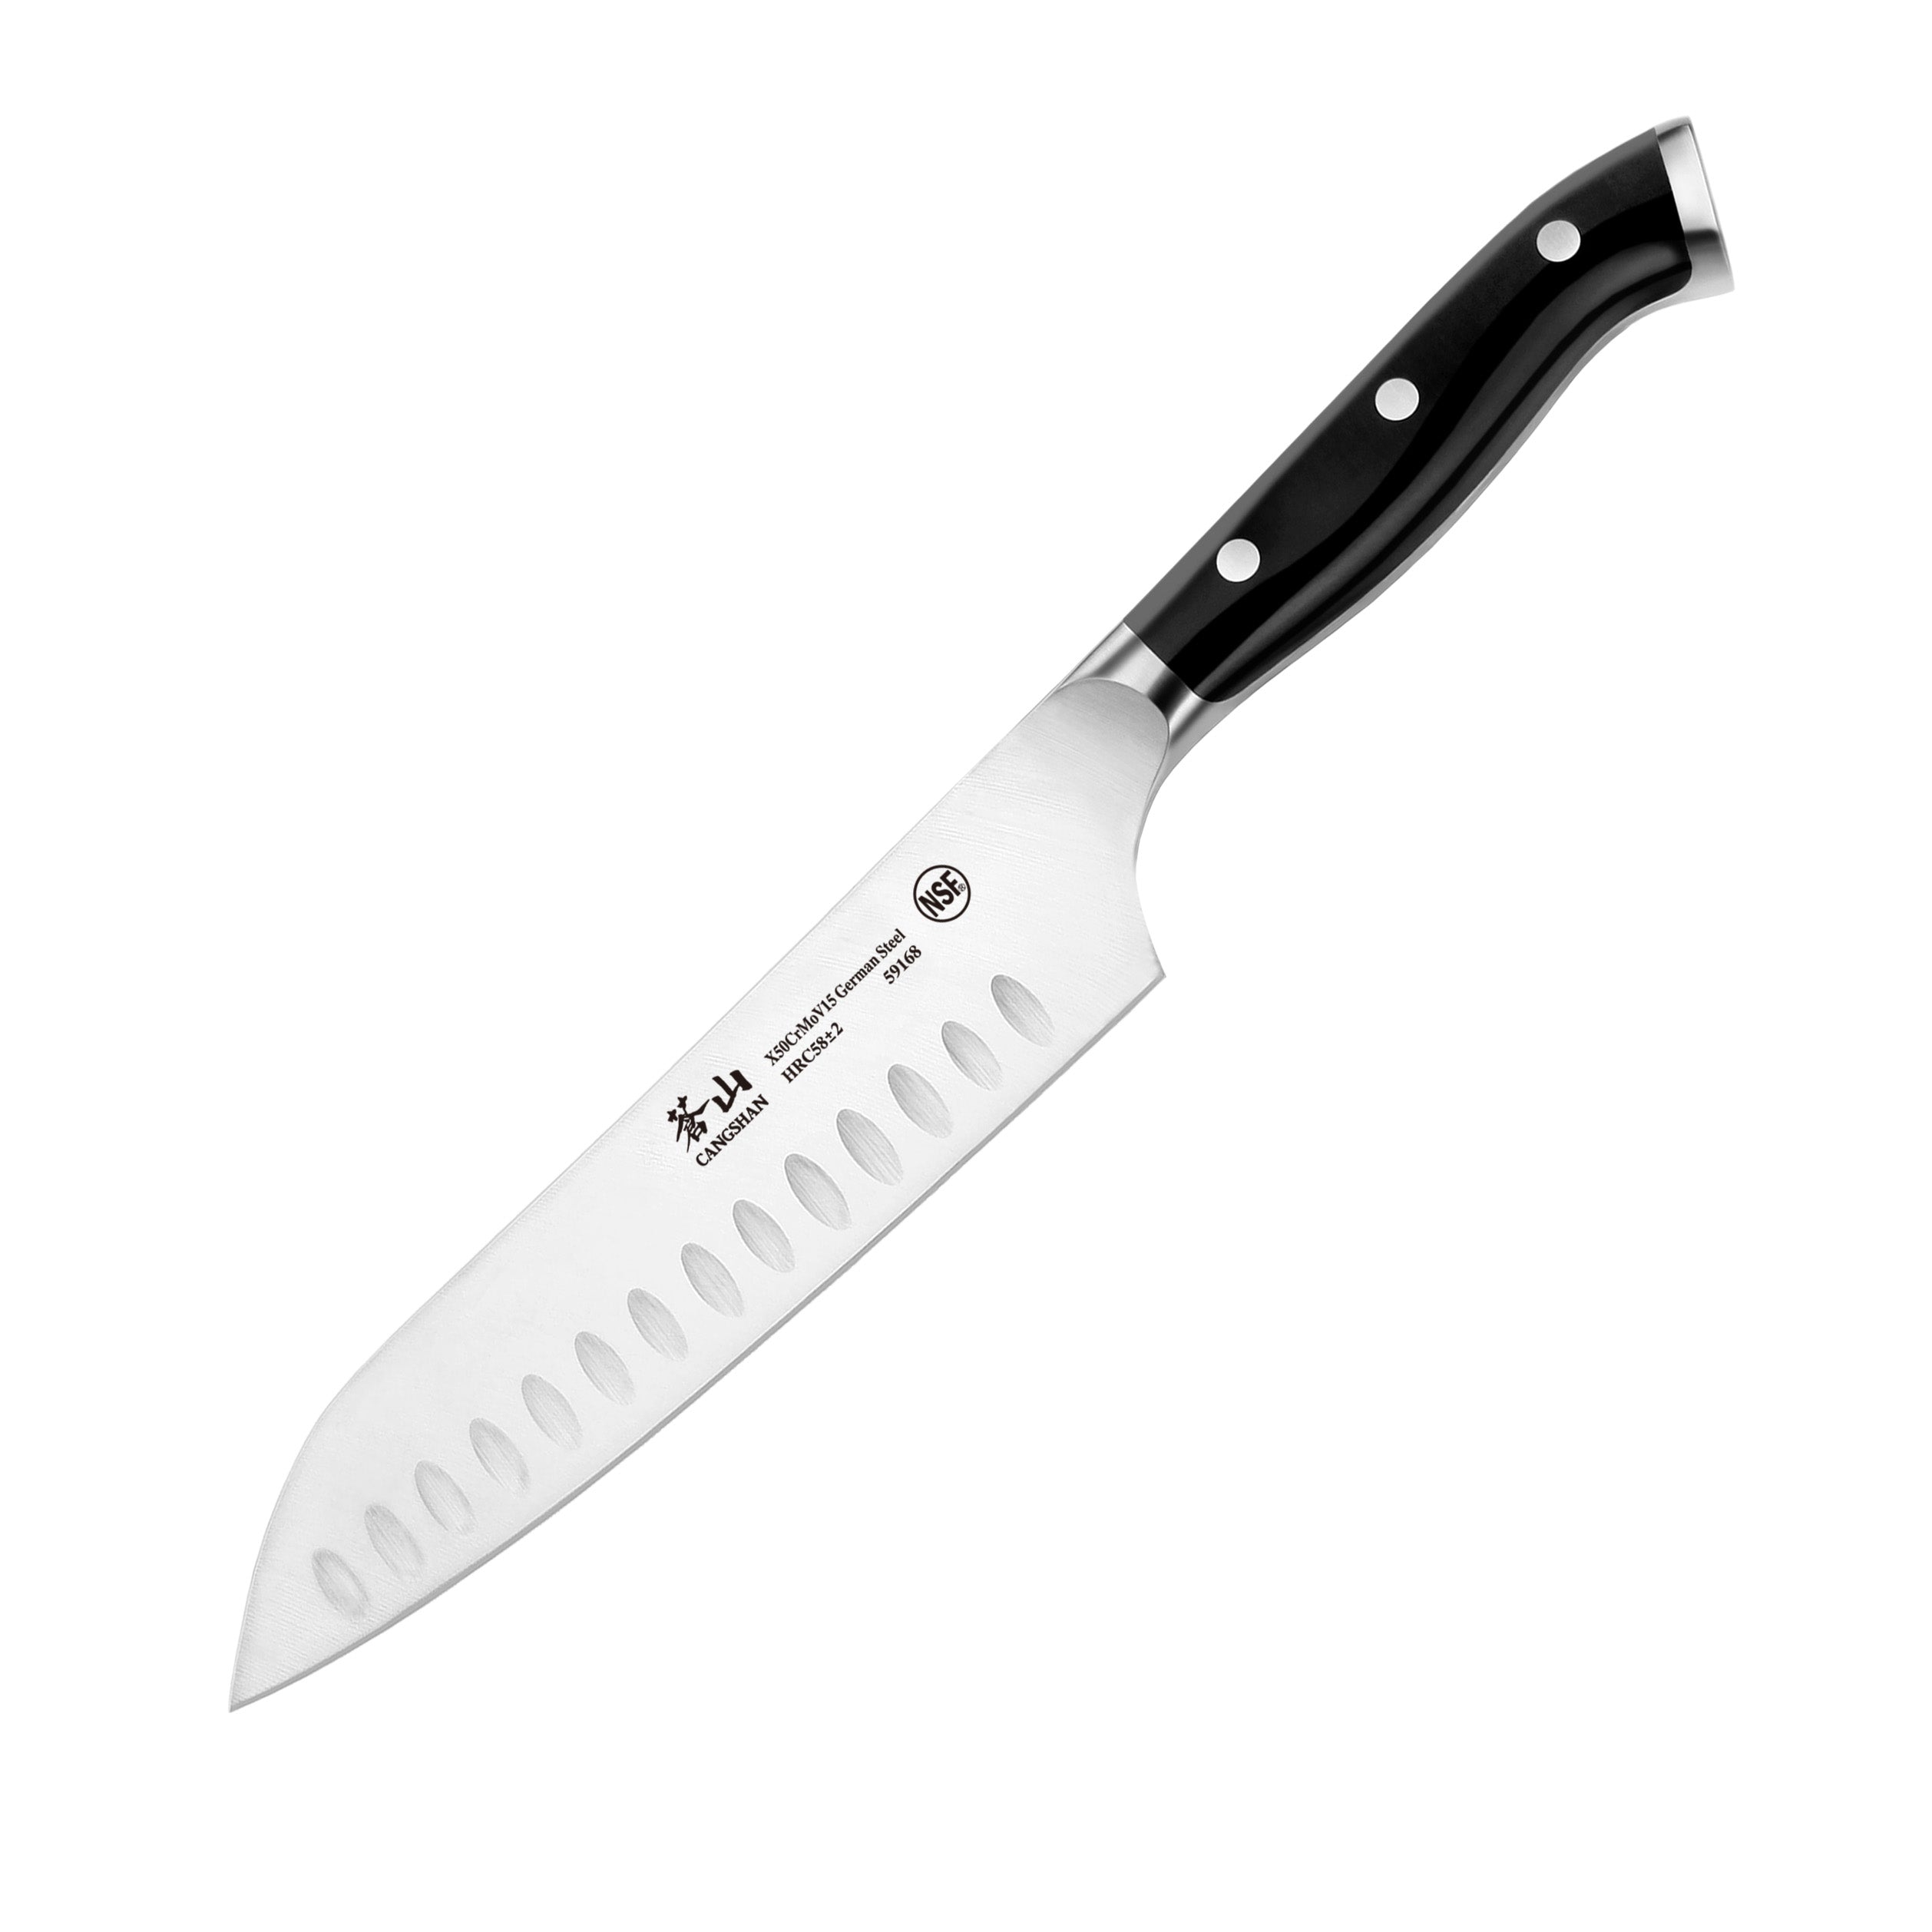 Dalstrong Santoku Knife - 7 inch - Vanquish Series - Forged High Carbon German Steel - Pom Handle - Razor Sharp Kitchen Knife - Asian Vegetable